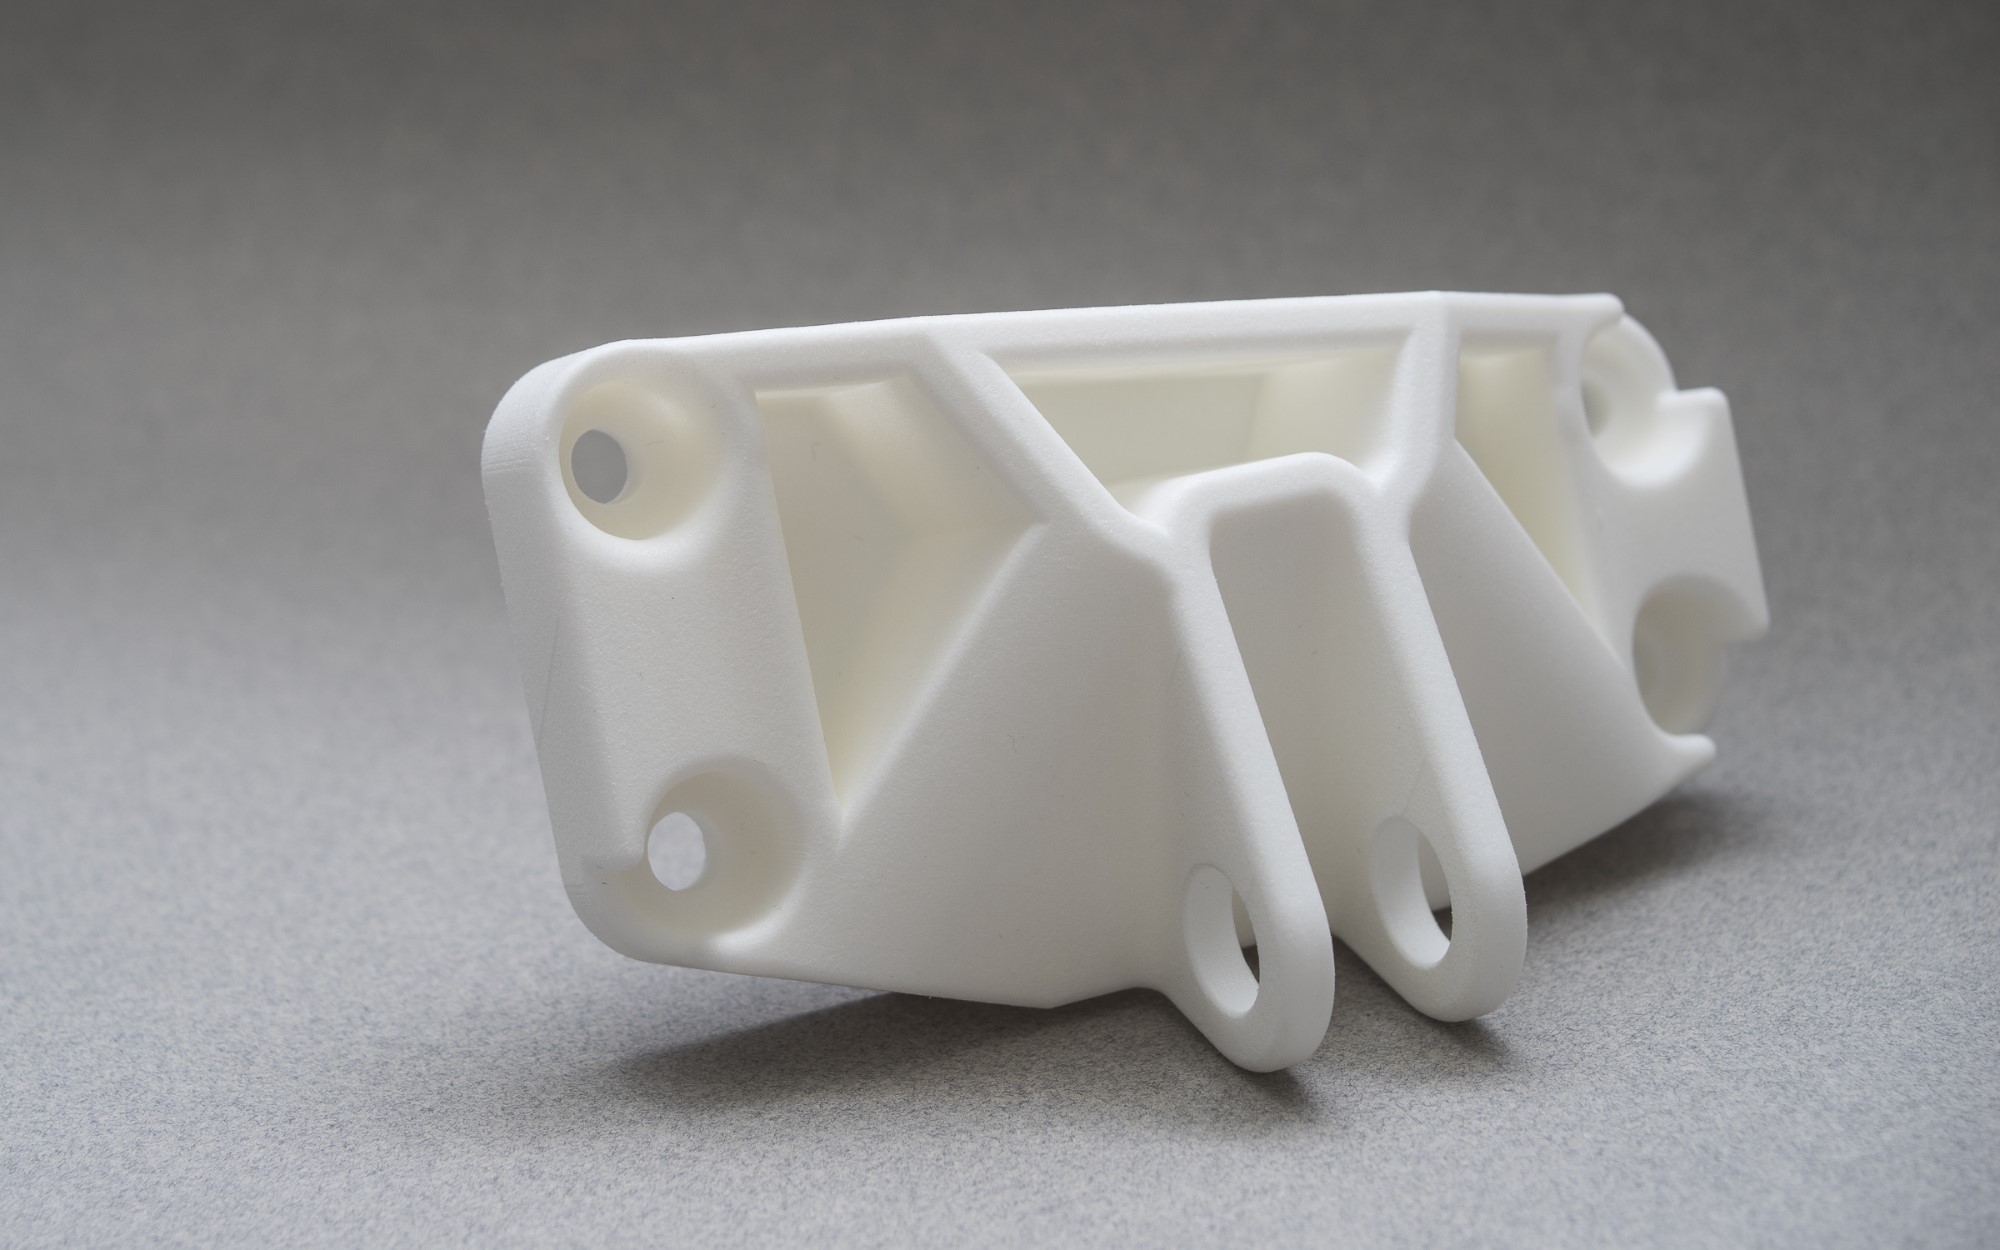 3D Printing Rapid Prototype SLS Service Car Parts Auto